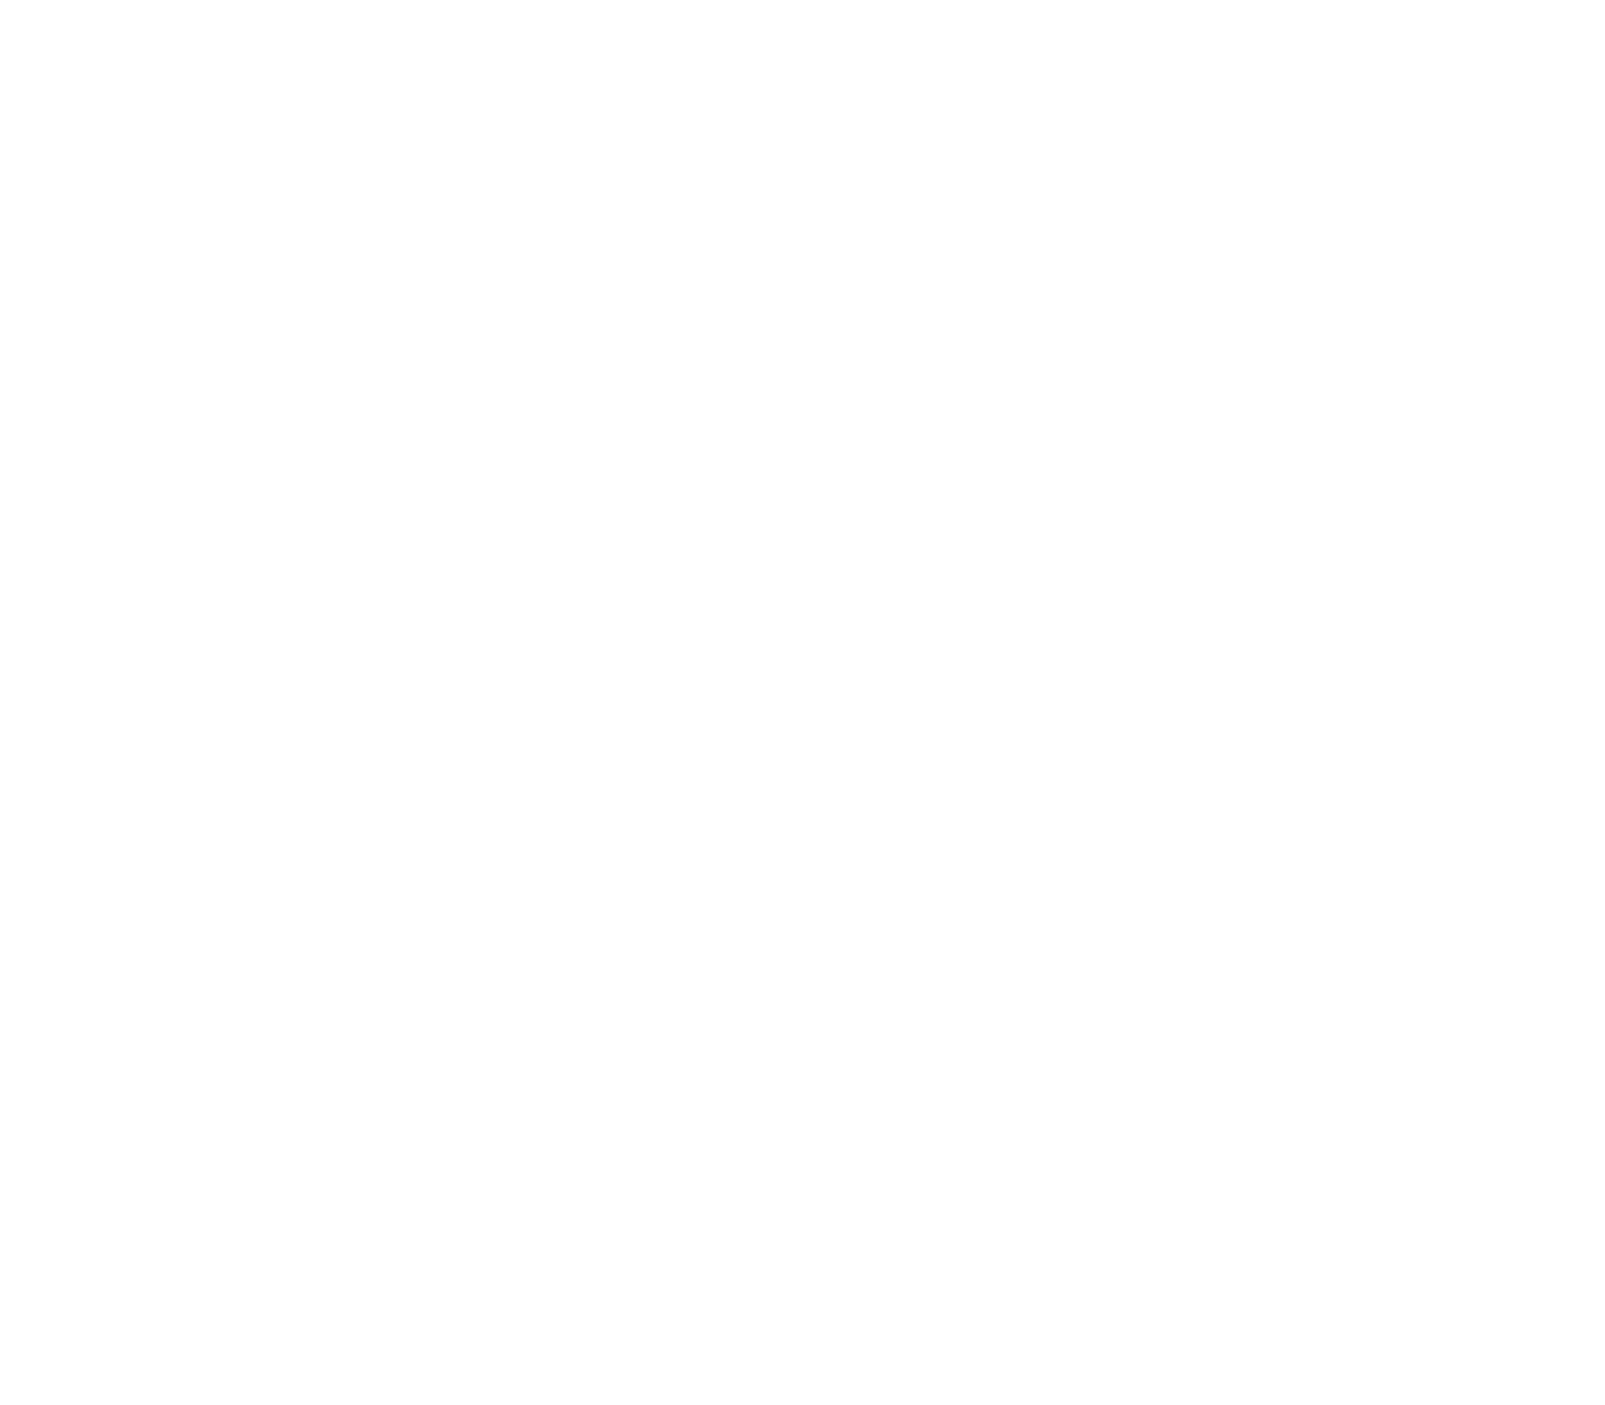 Butterfly Network logo pour fonds sombres (PNG transparent)